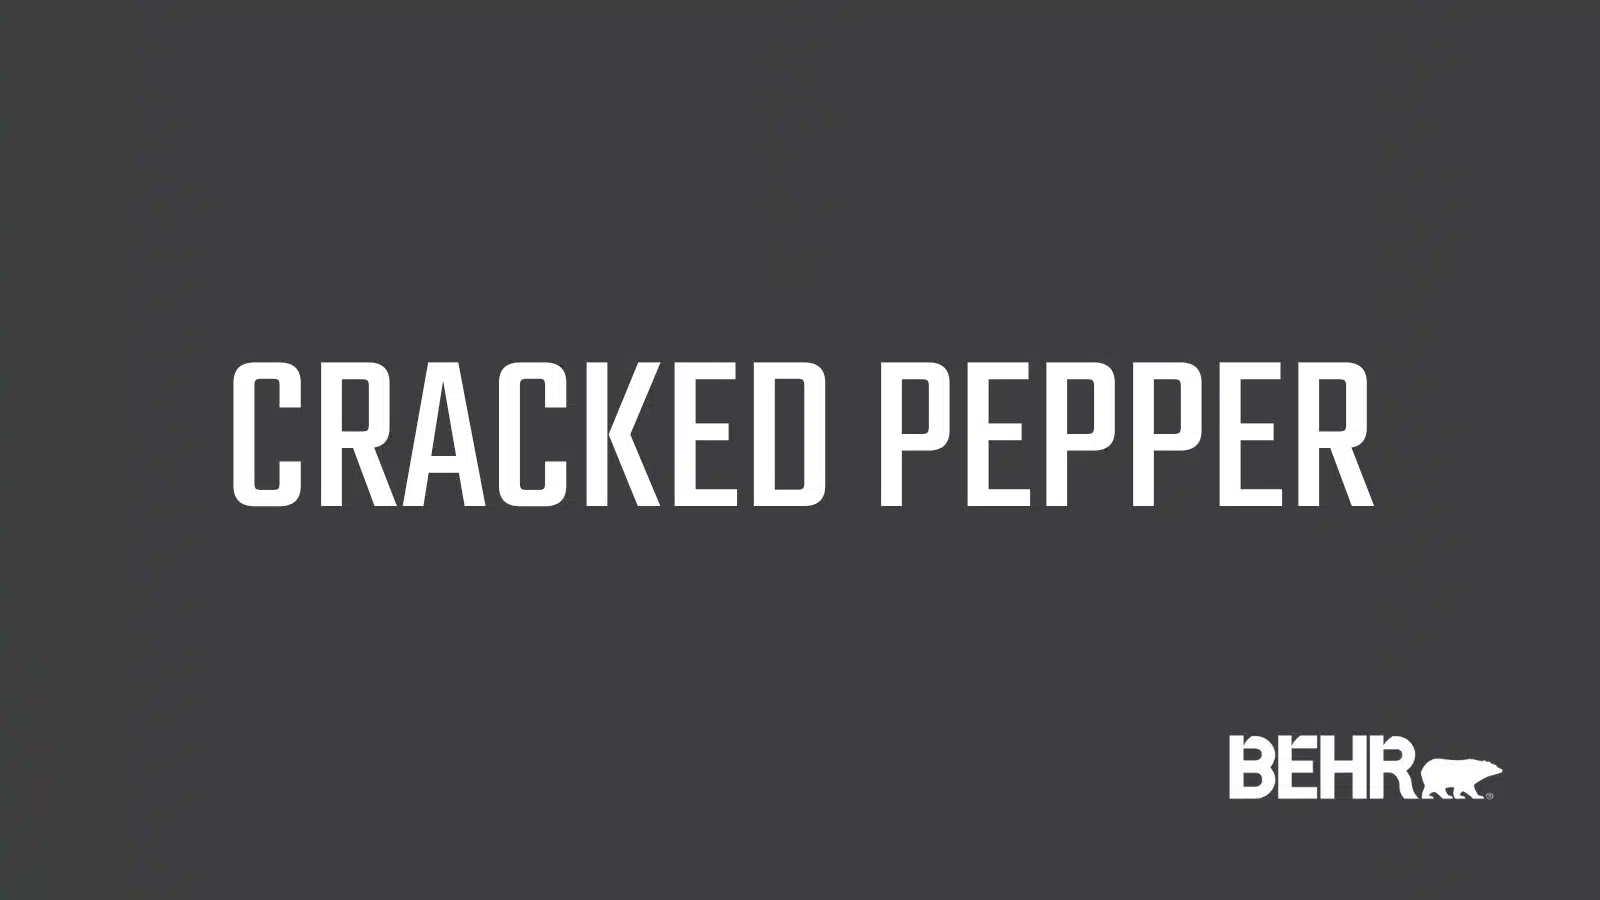 Behr Cracked Pepper